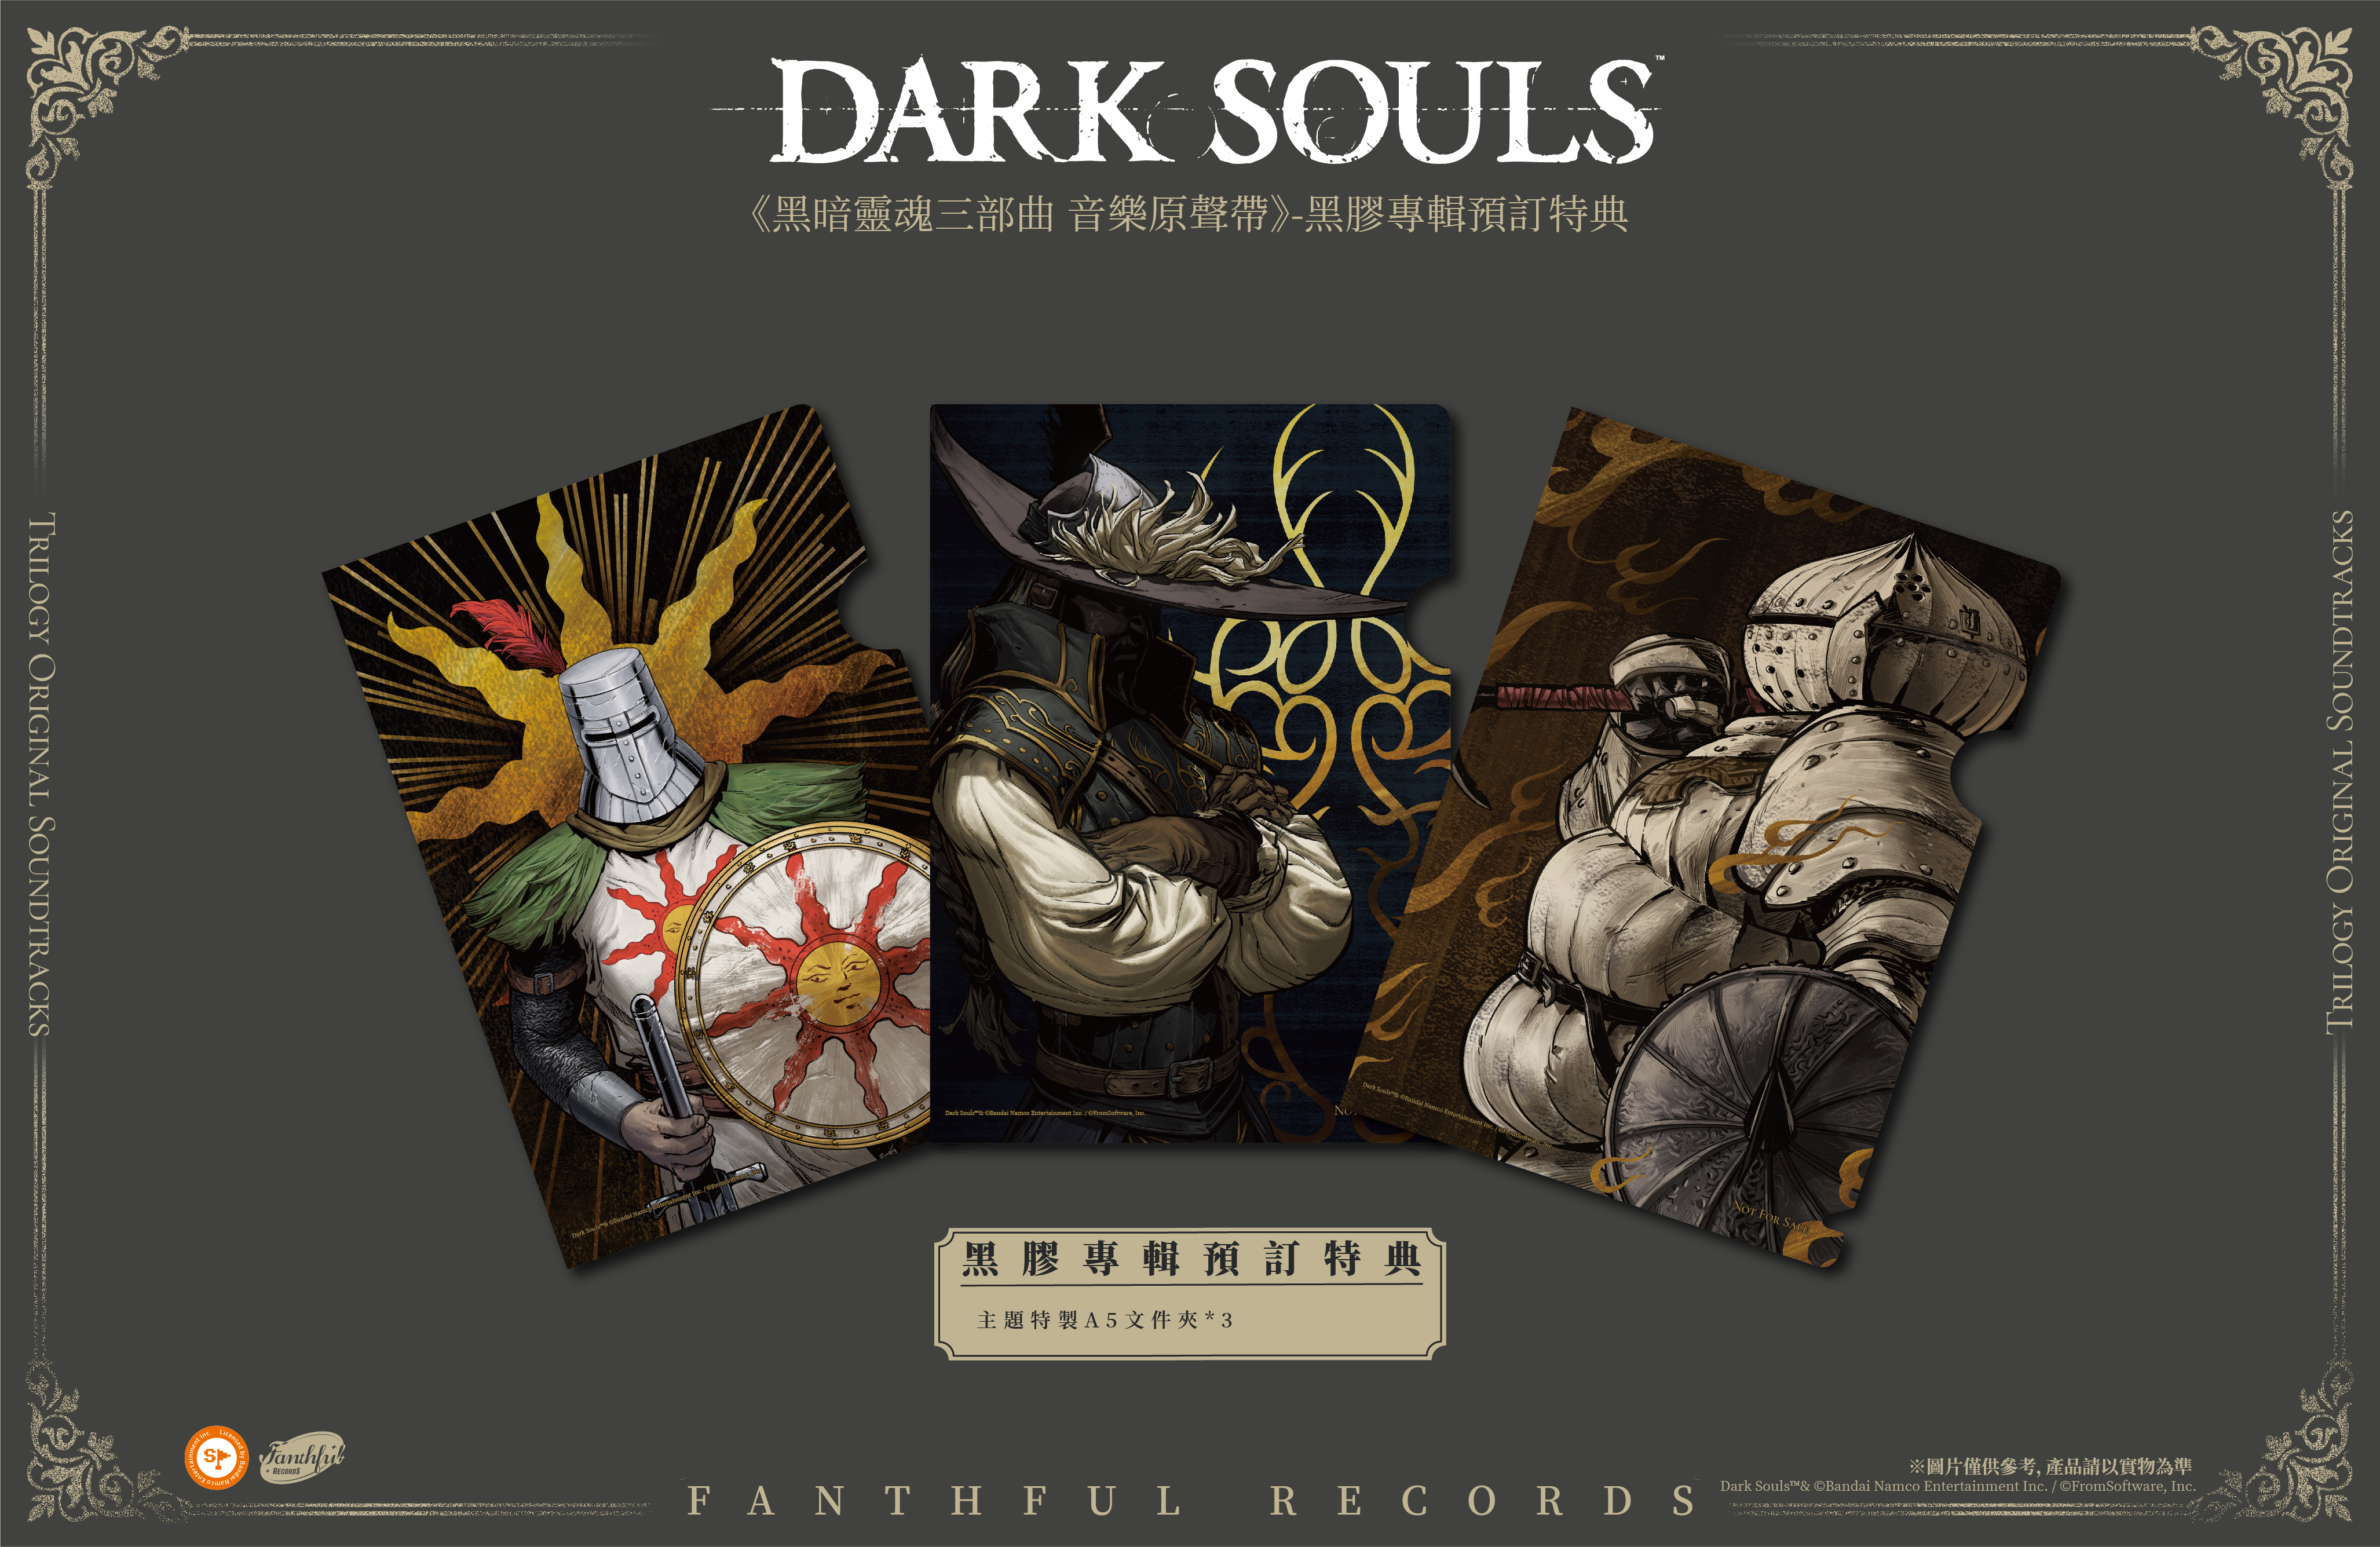 FANTHFUL RECORDS 傾情呈現《黑暗靈魂三部曲》音樂原聲帶